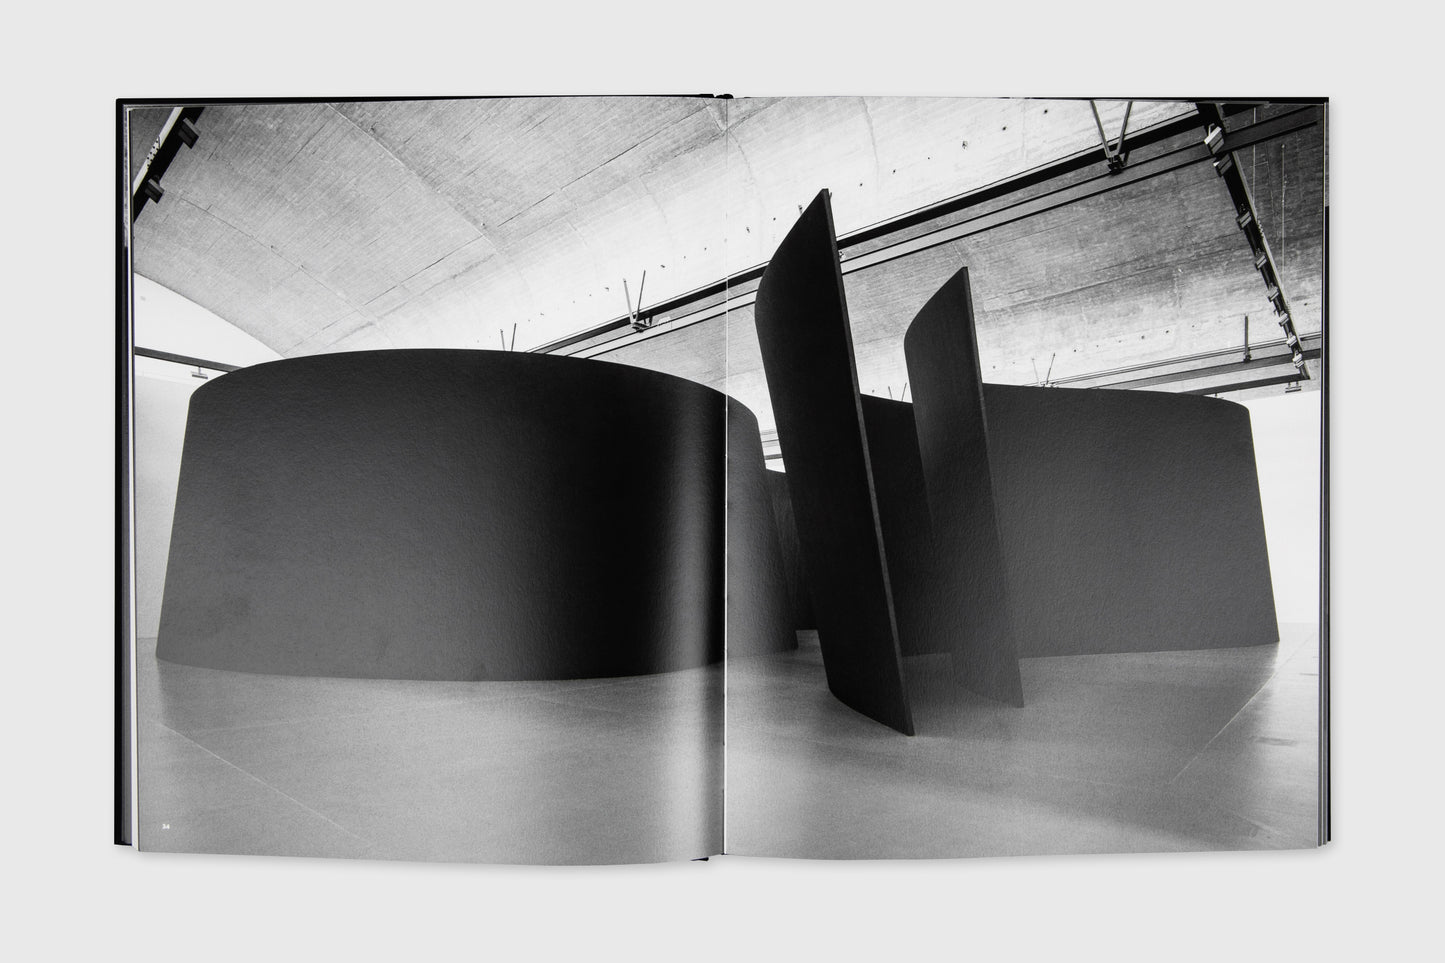 Richard Serra: Transmitter